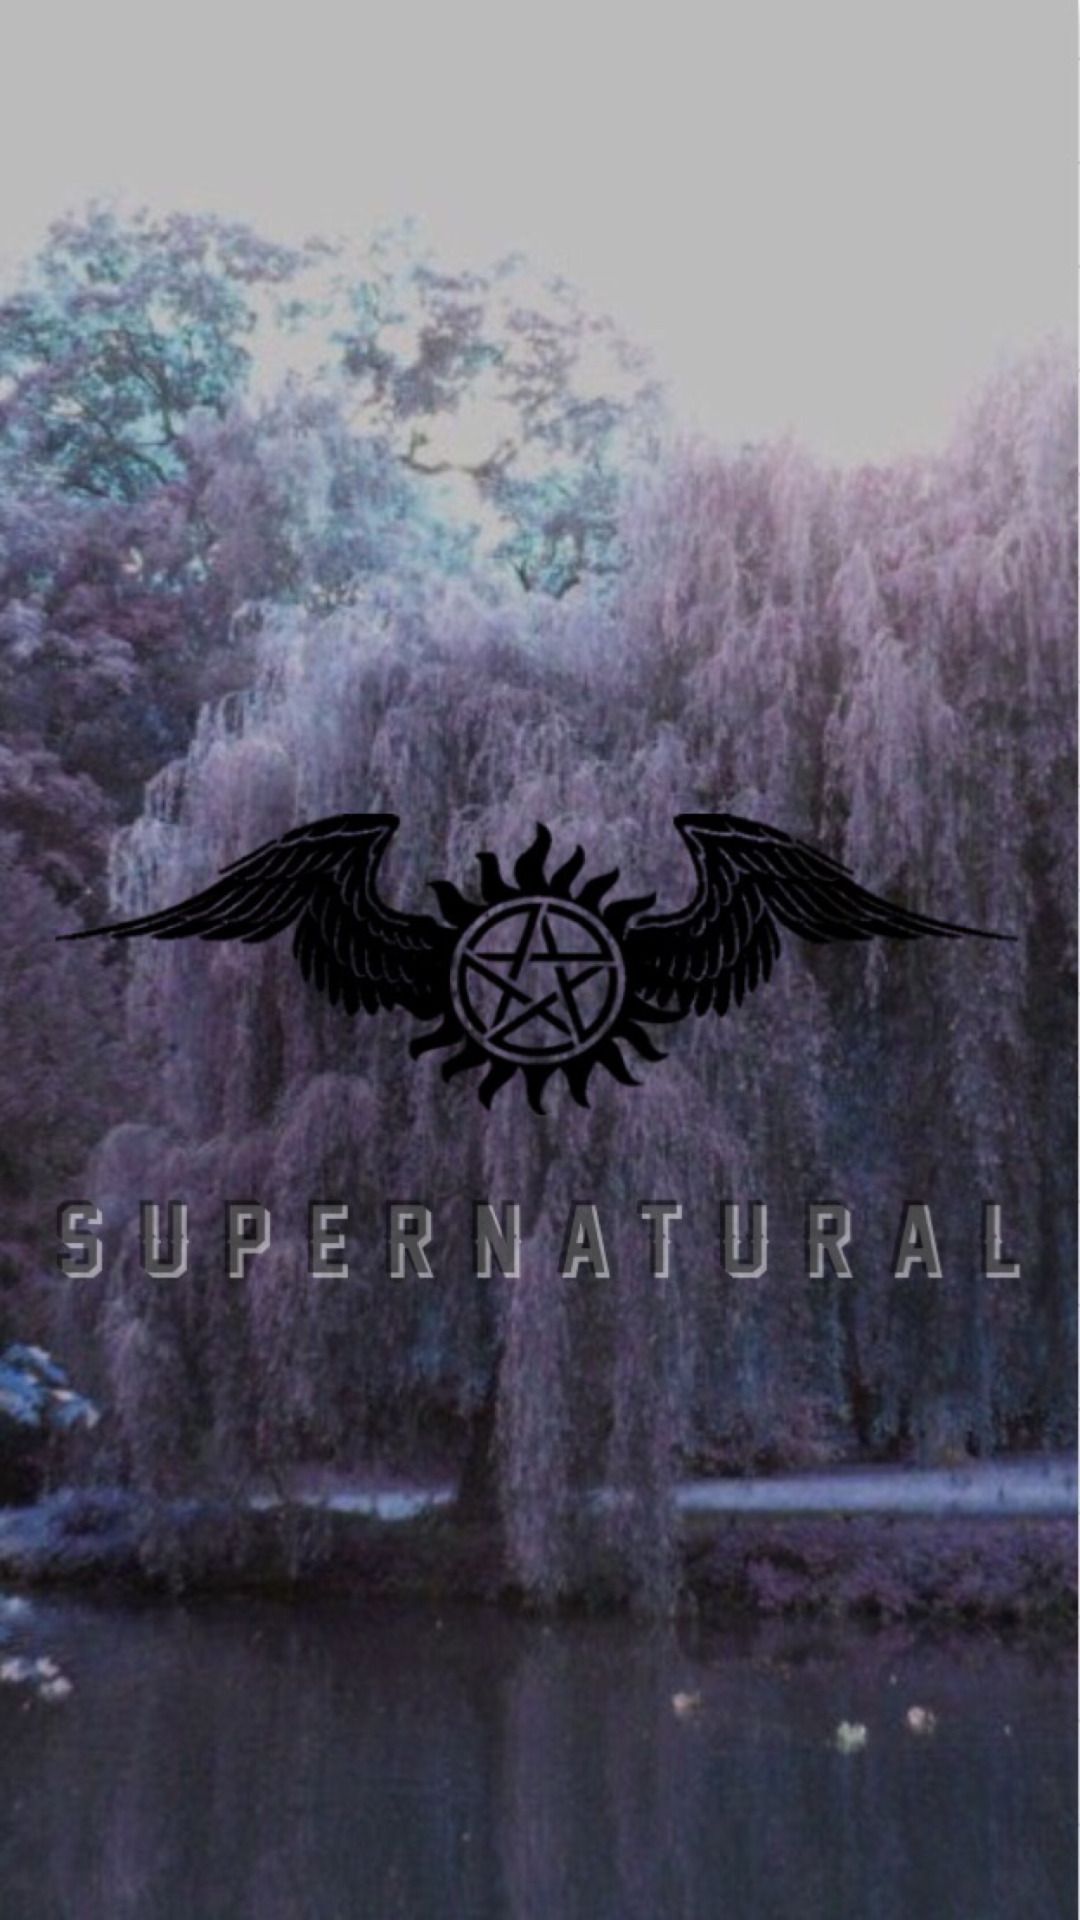 Supernatural wallpaper ideas. supernatural wallpaper, supernatural, supernatural fandom